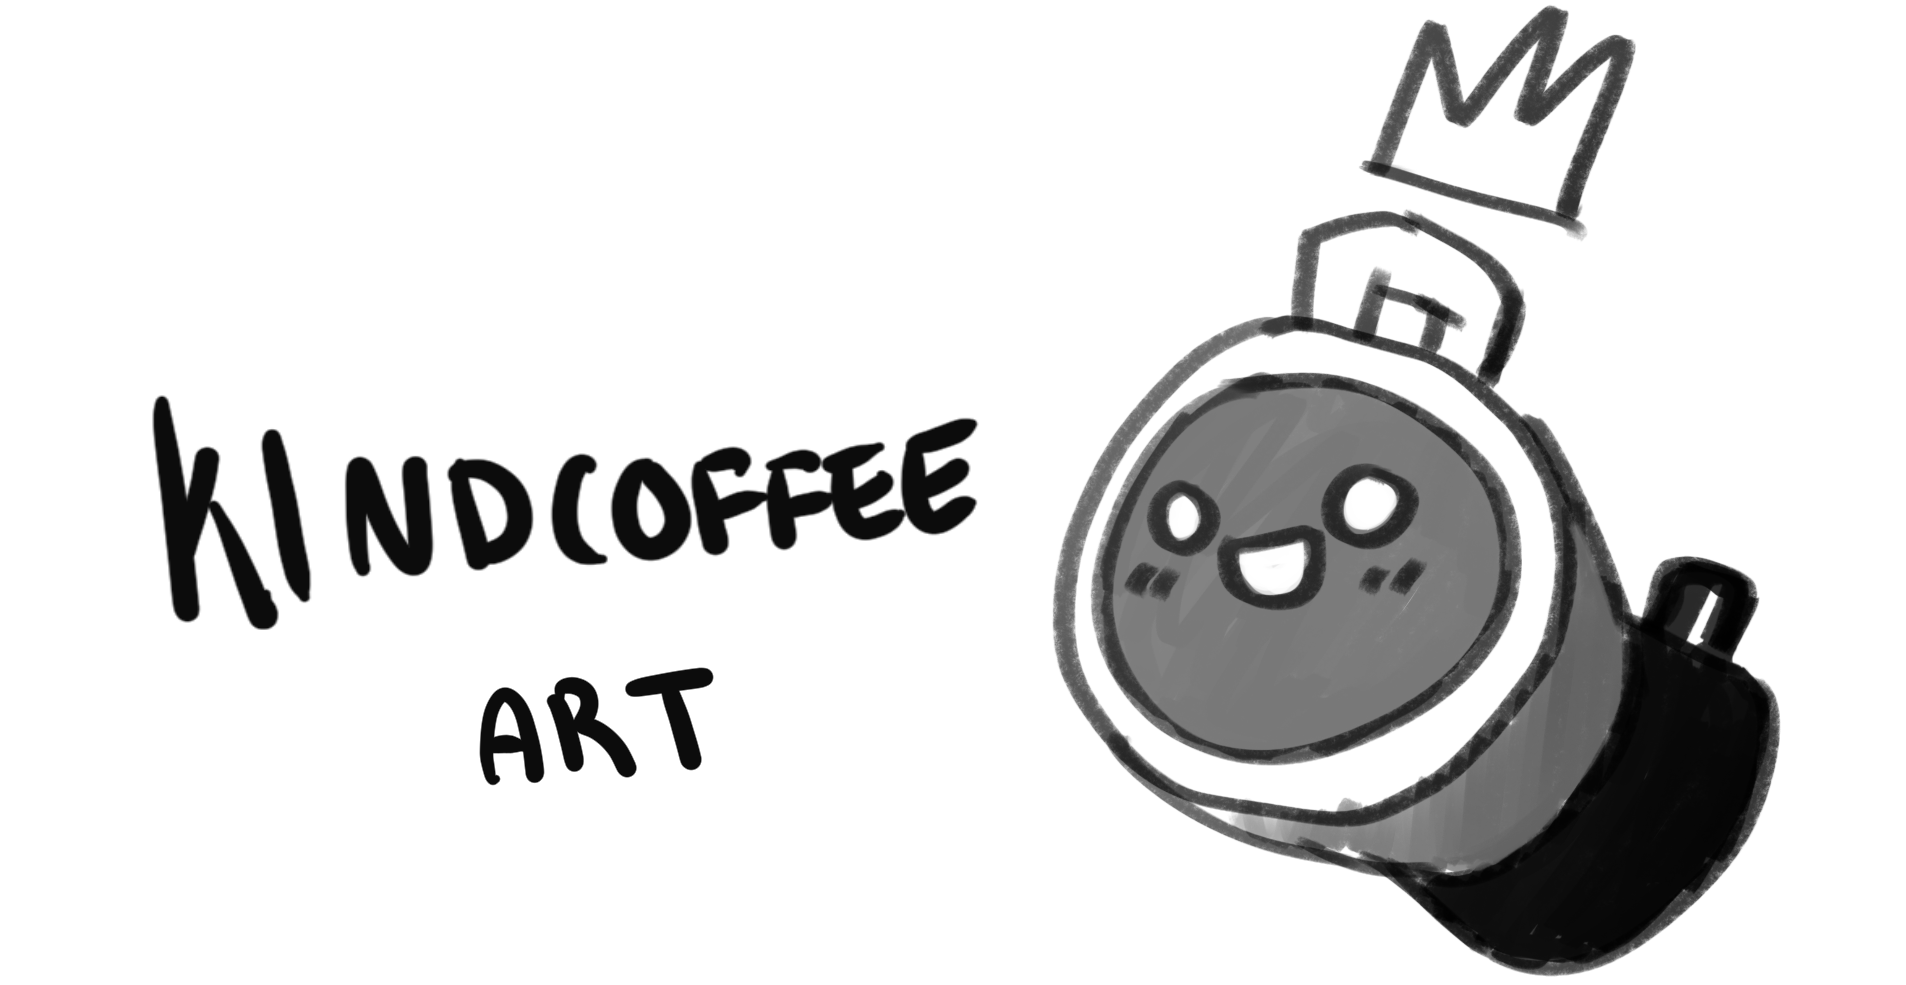 Kindcoffee art